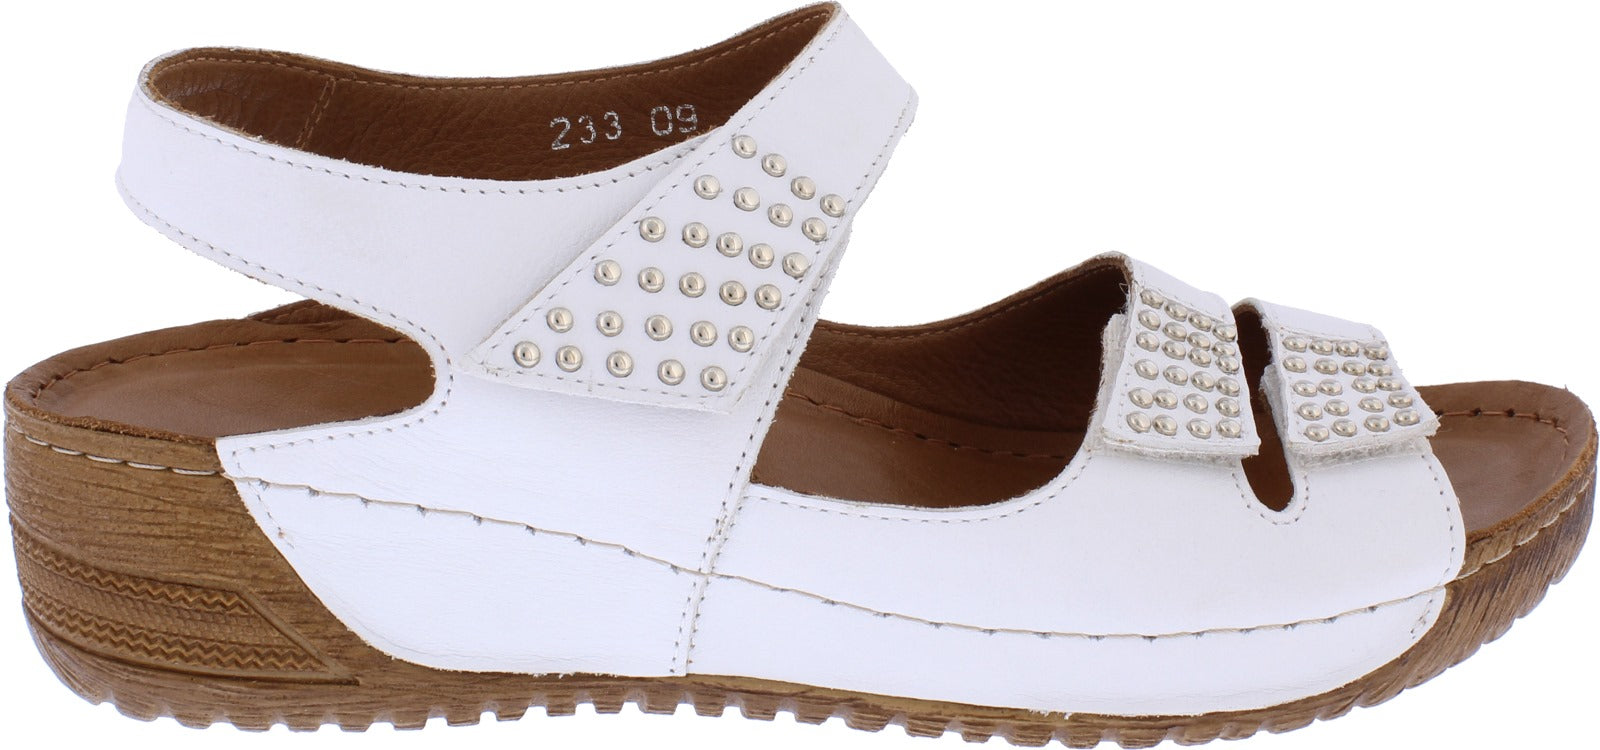 Adesso Loretta  Ladies White Leather Touch Fastening Sandals